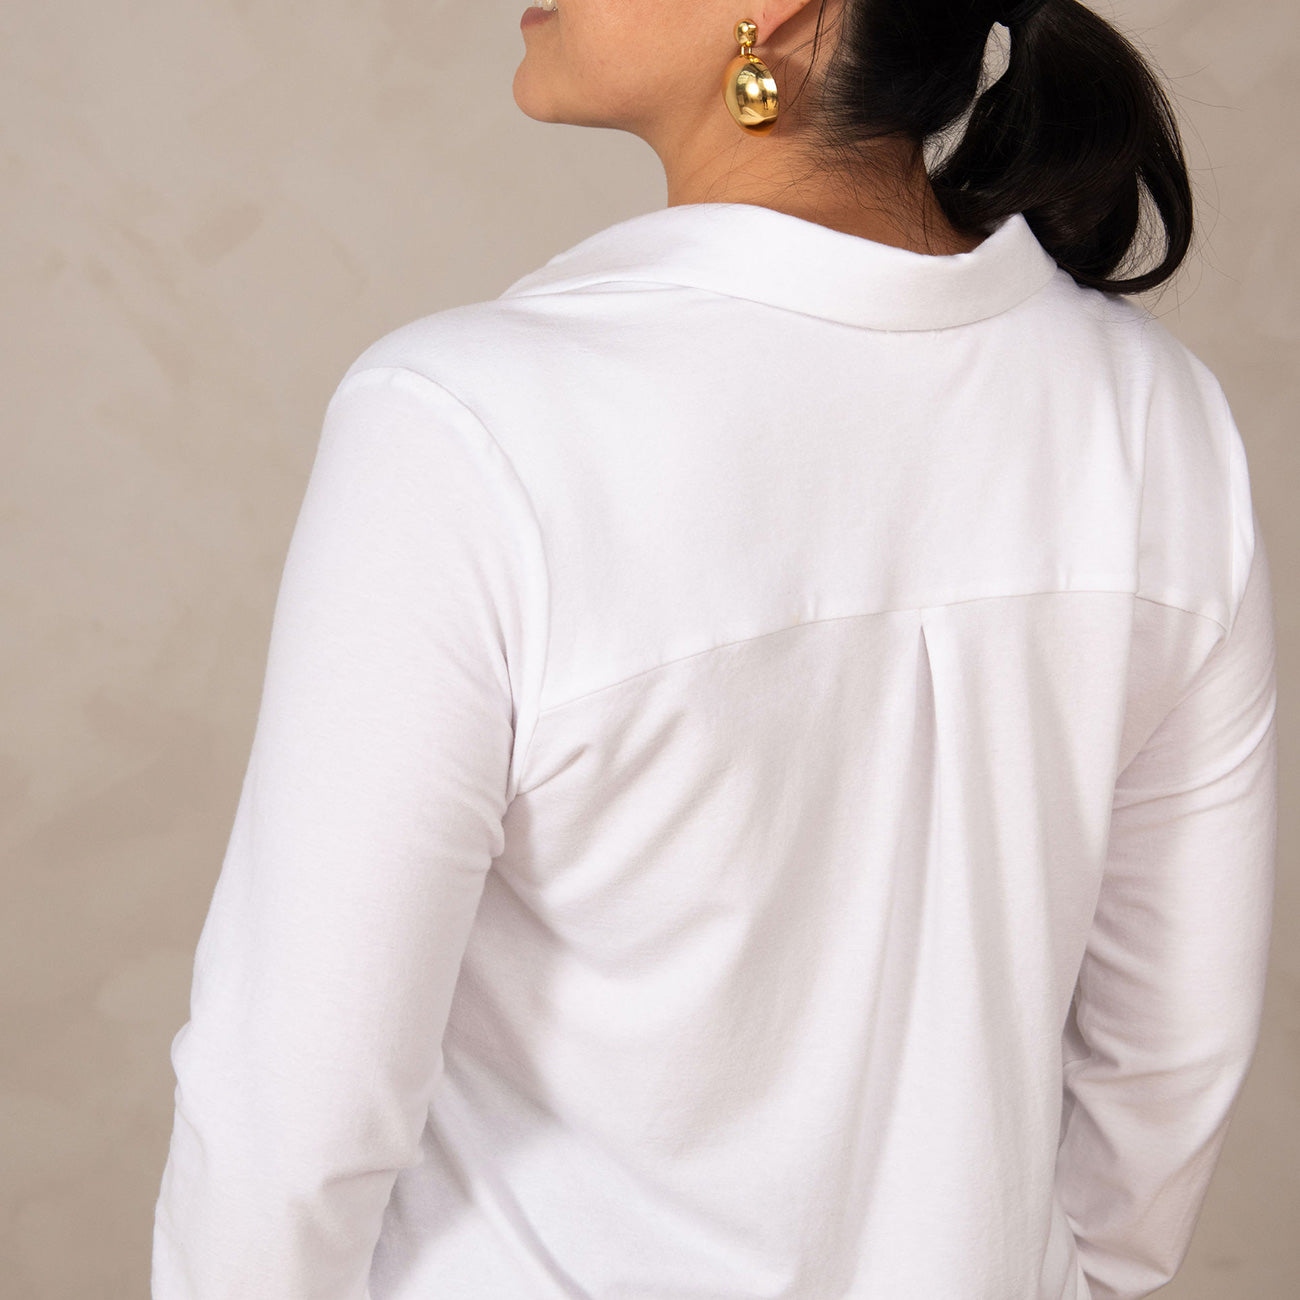 woman wearing a white button-up shirt